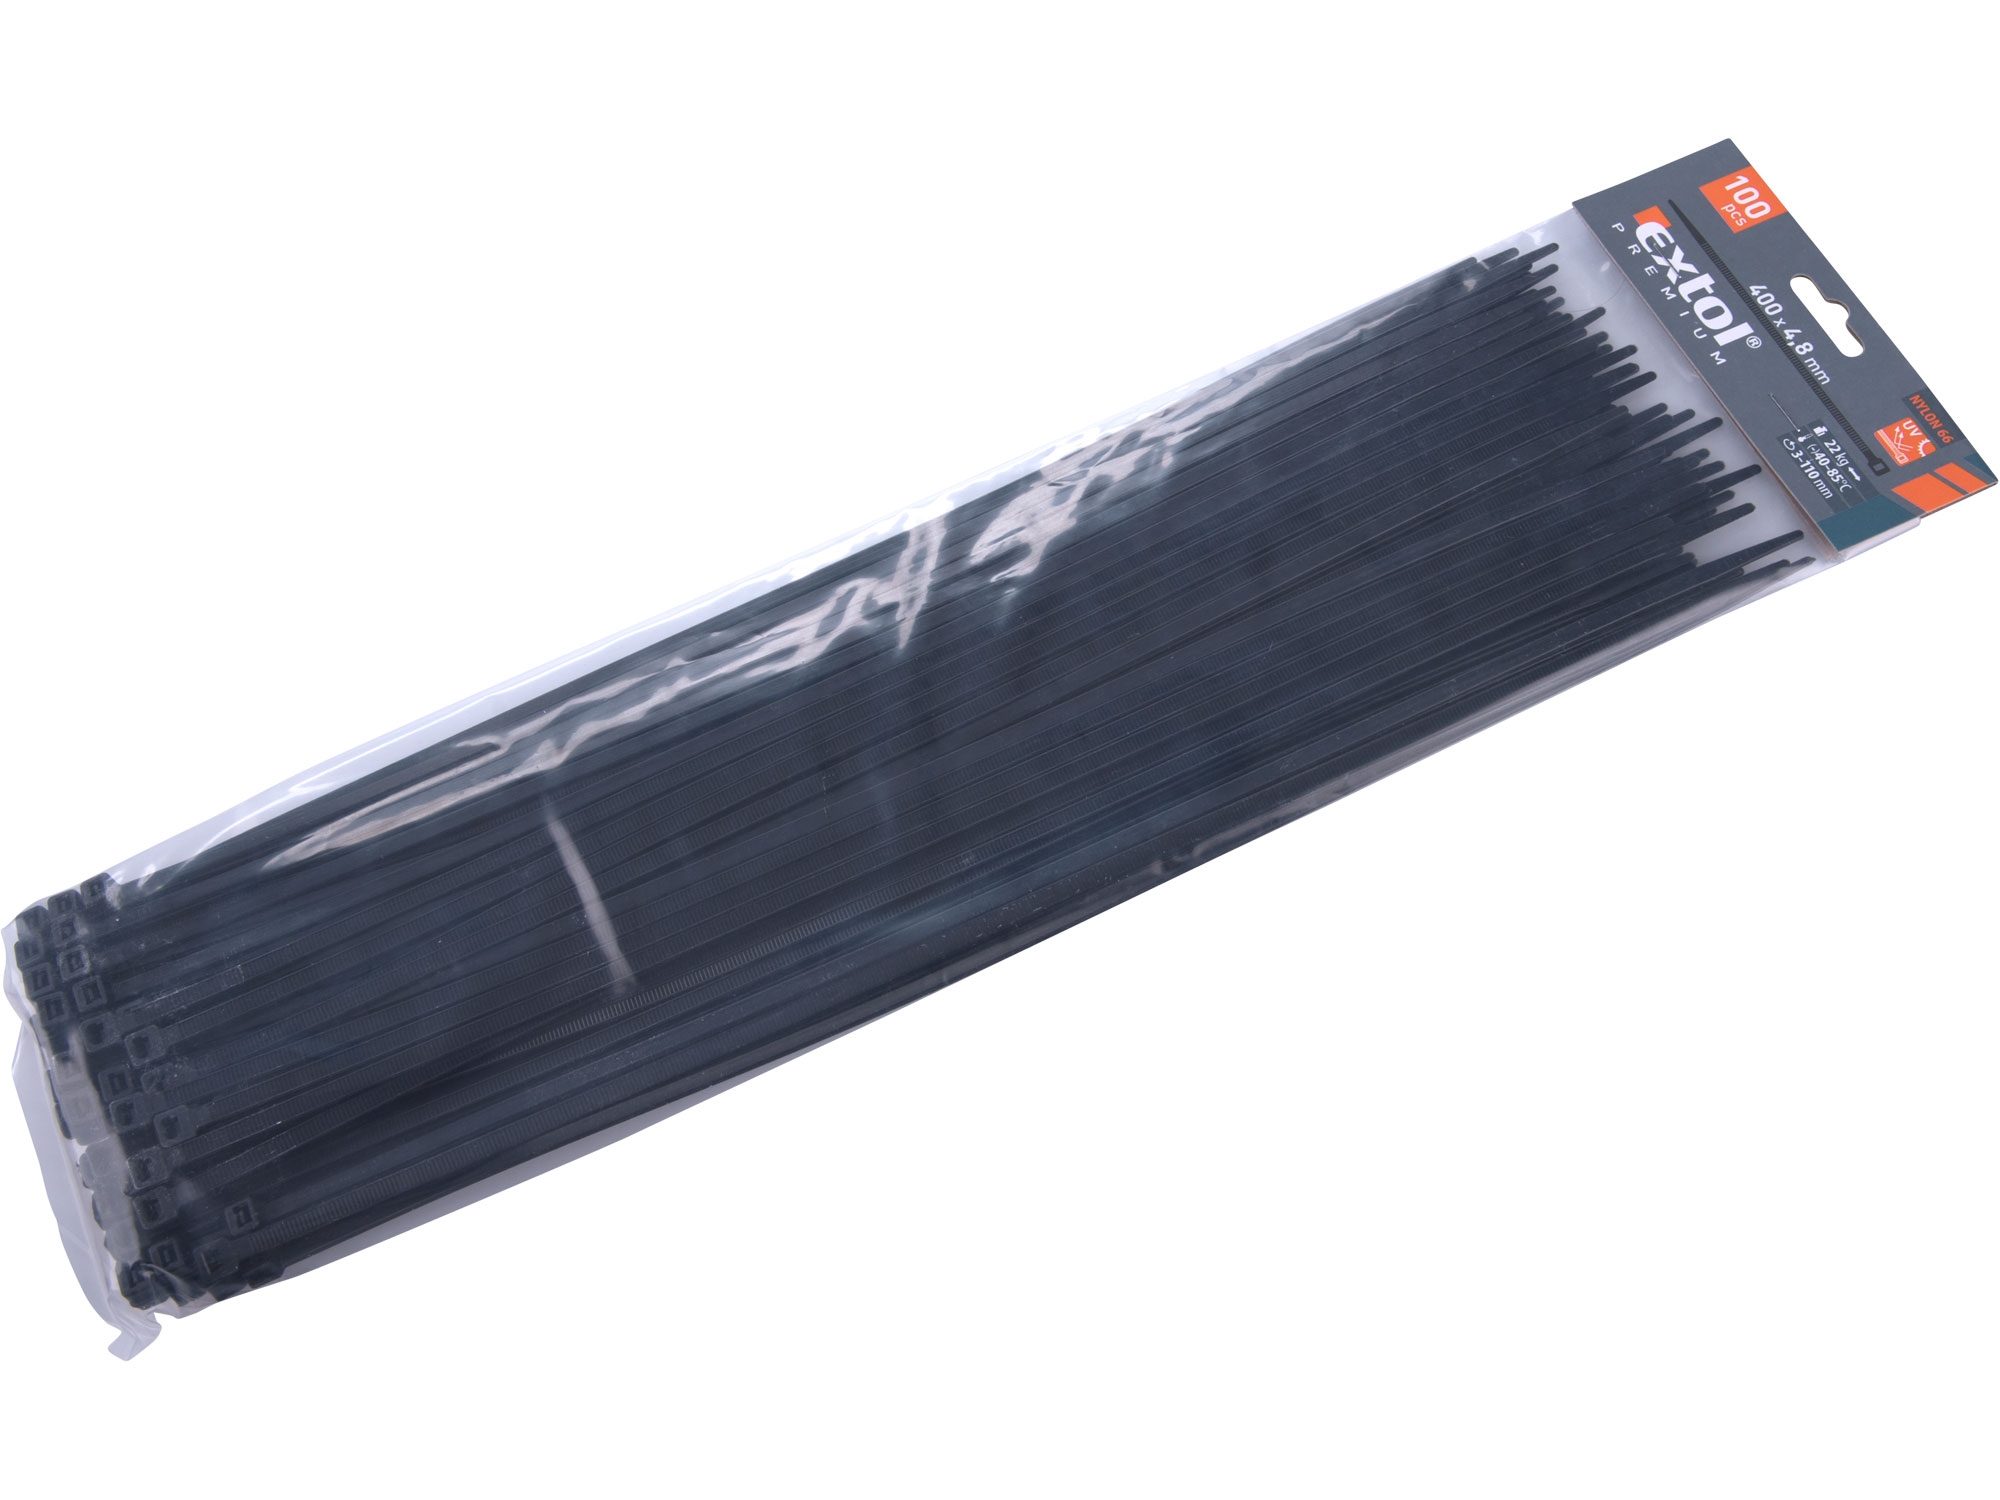 pásky stahovací černé, 400x4,8mm, 100ks, nylon, EXTOL PREMIUM 8856166